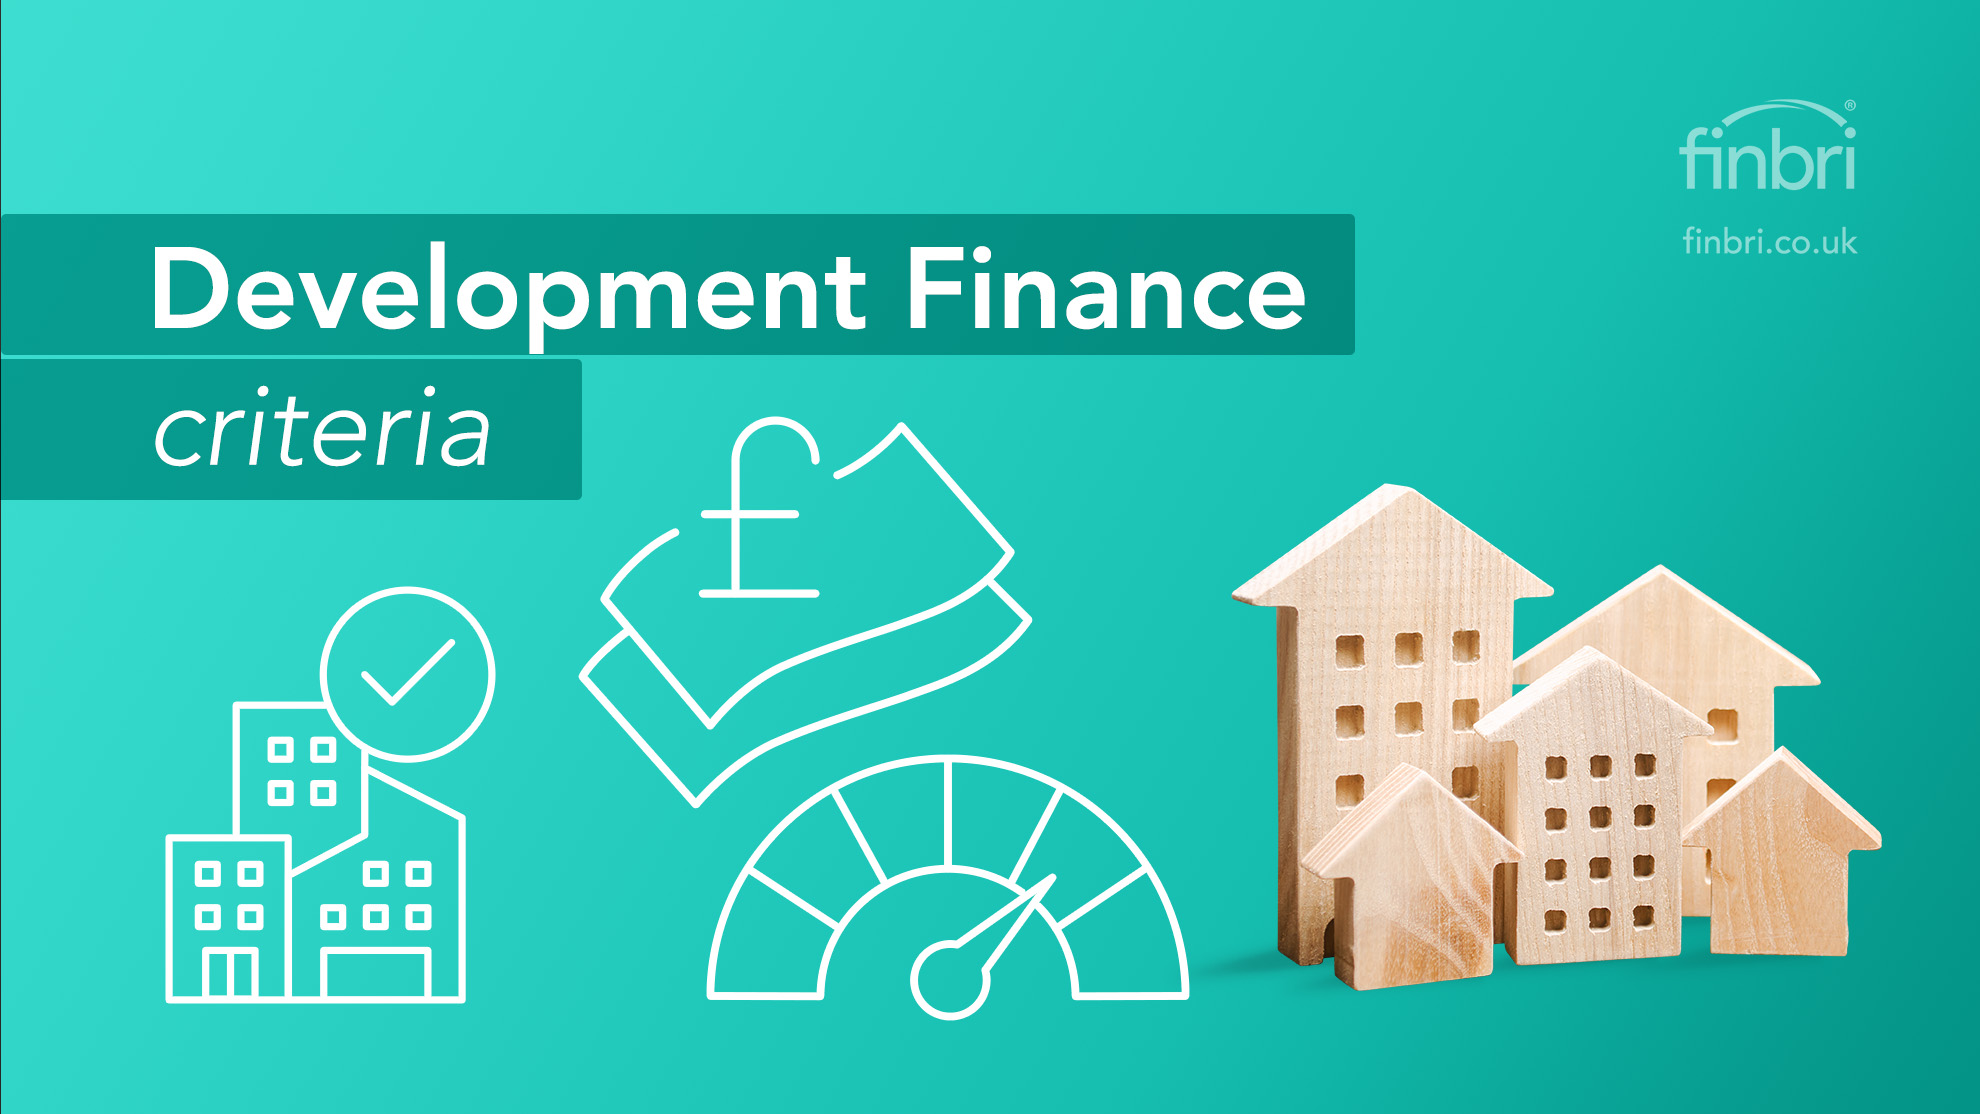 Development Finance criteria